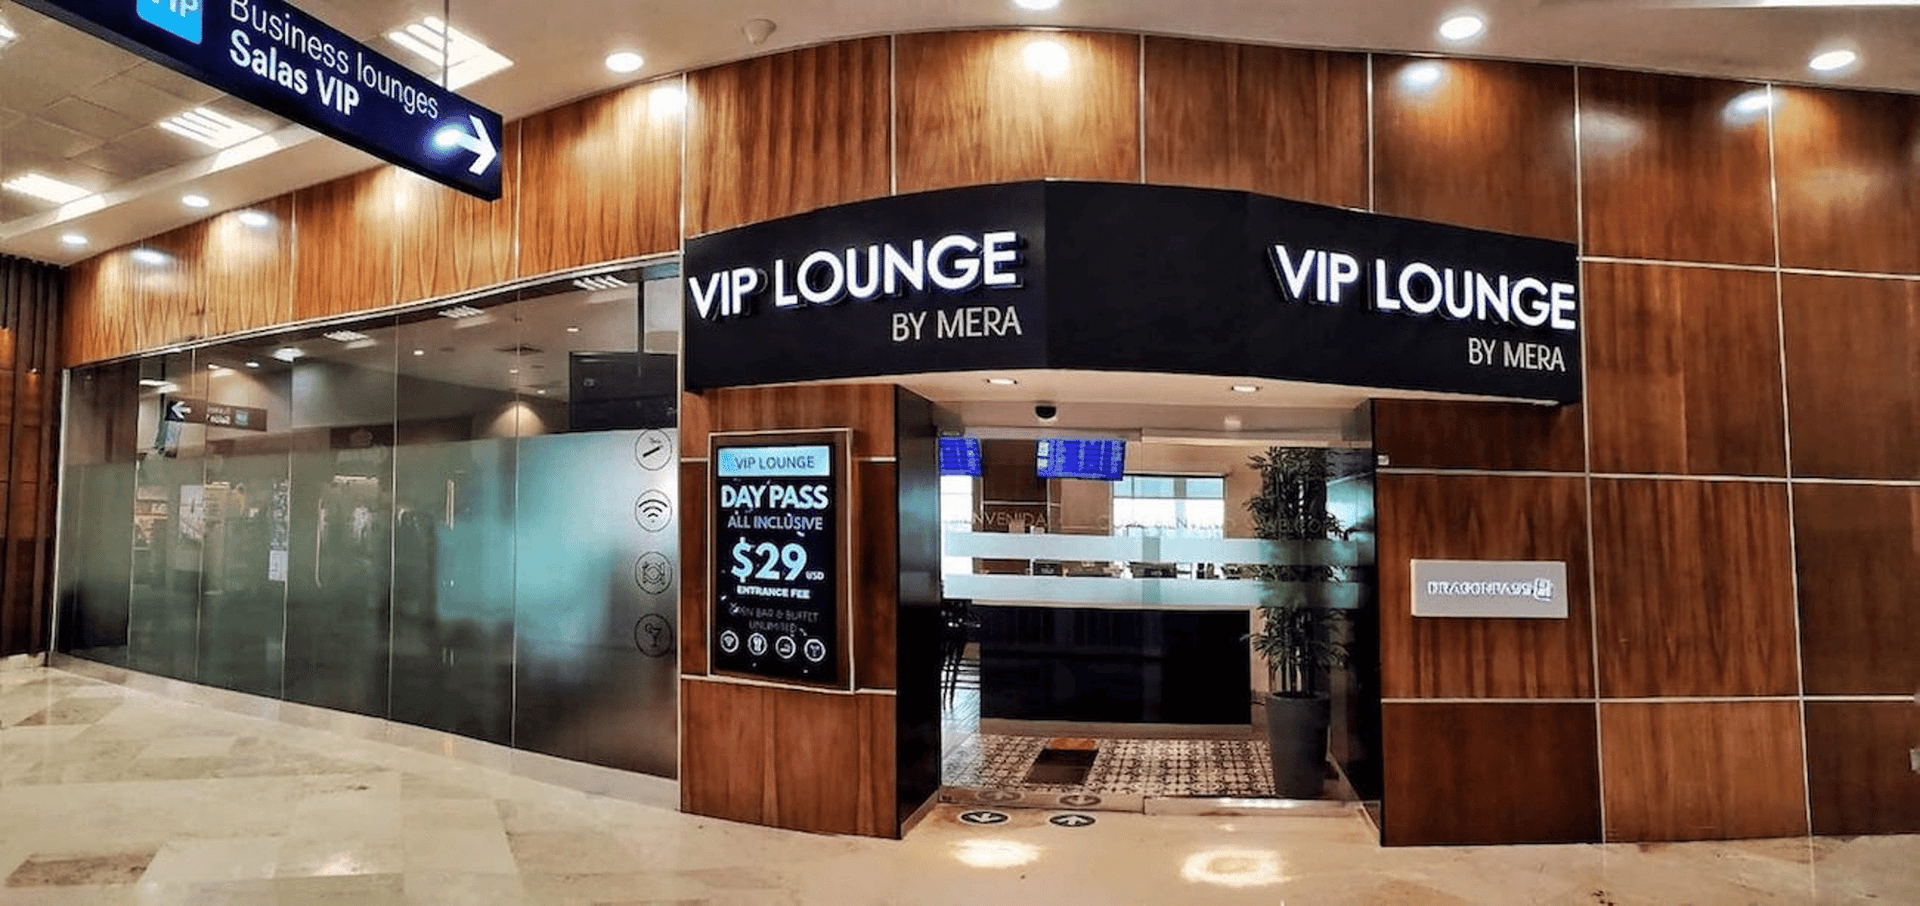 Mera Business Lounge image 20 of 28